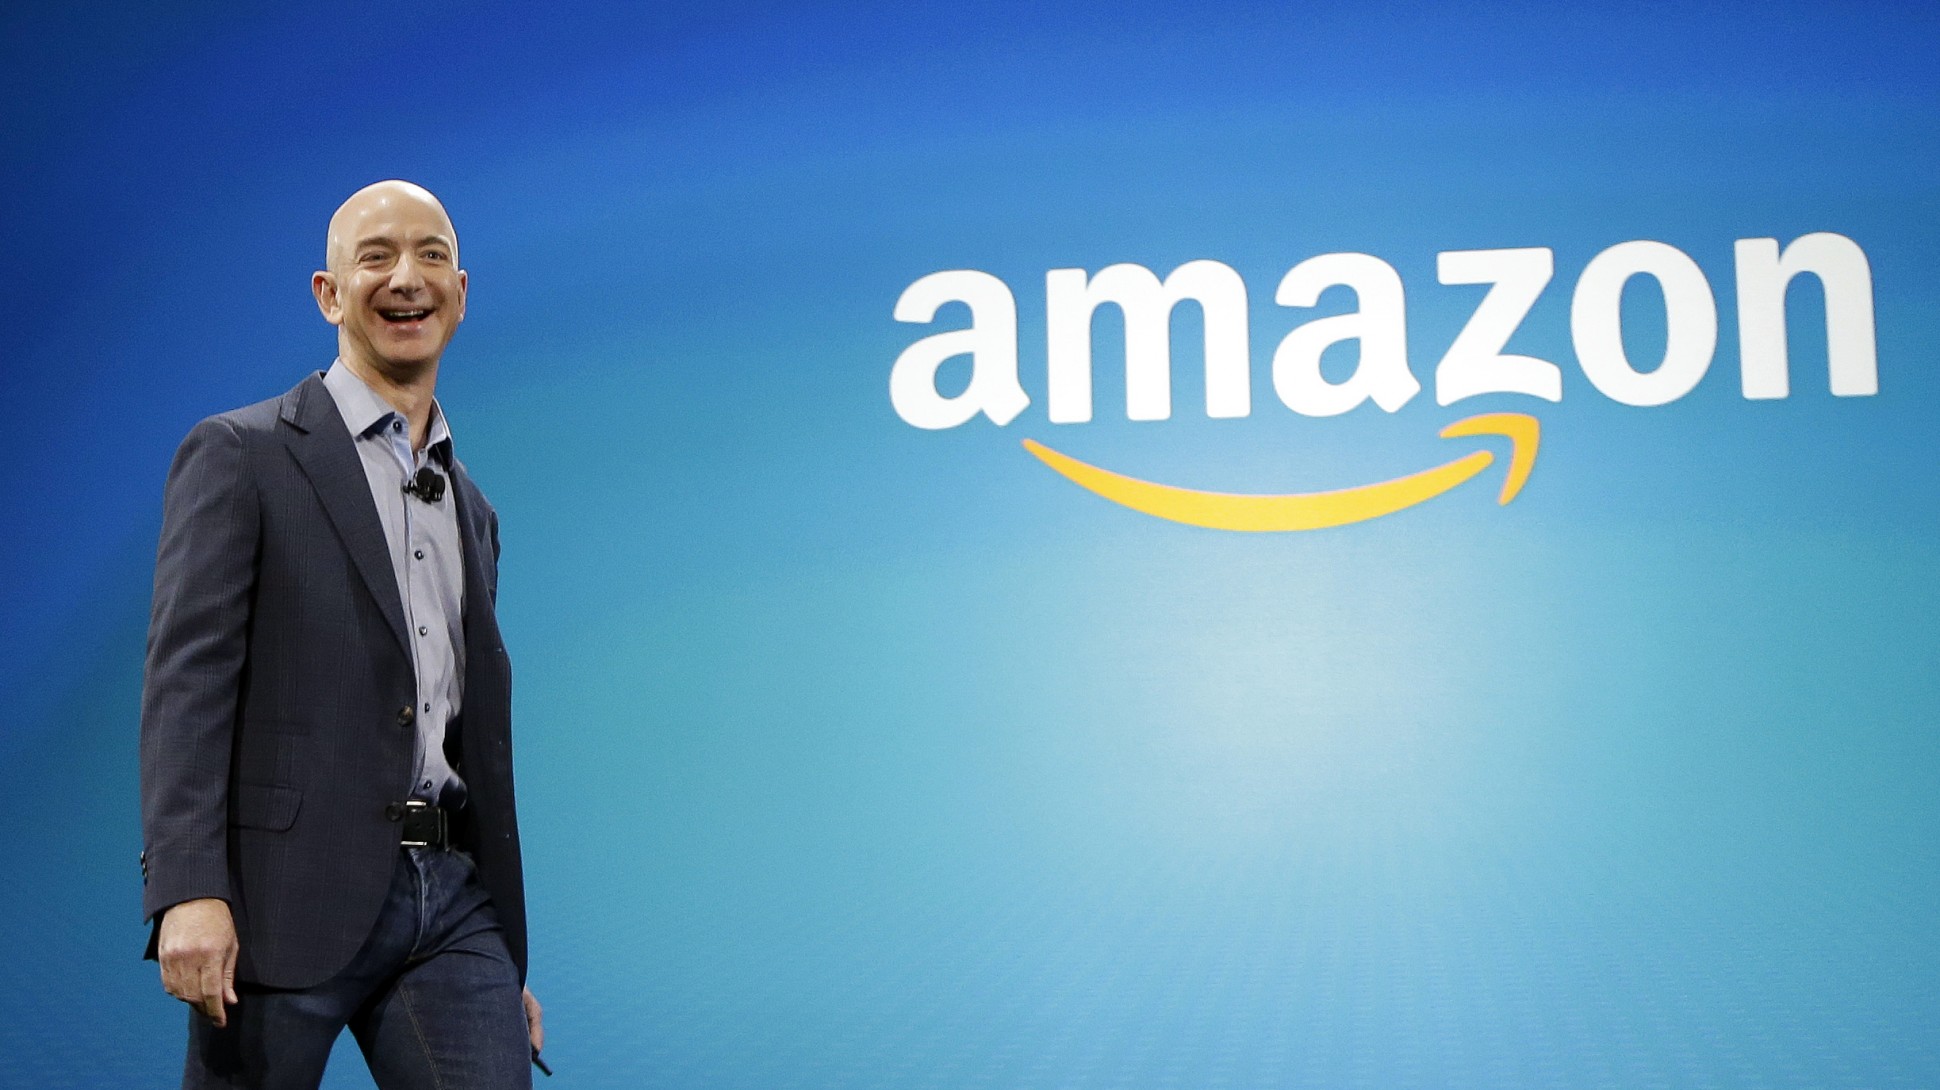 Amazon-Chief-Executive-Jeff-Bezos-Tweet-confirms-2-years-leave-of-Diego-Piacentini